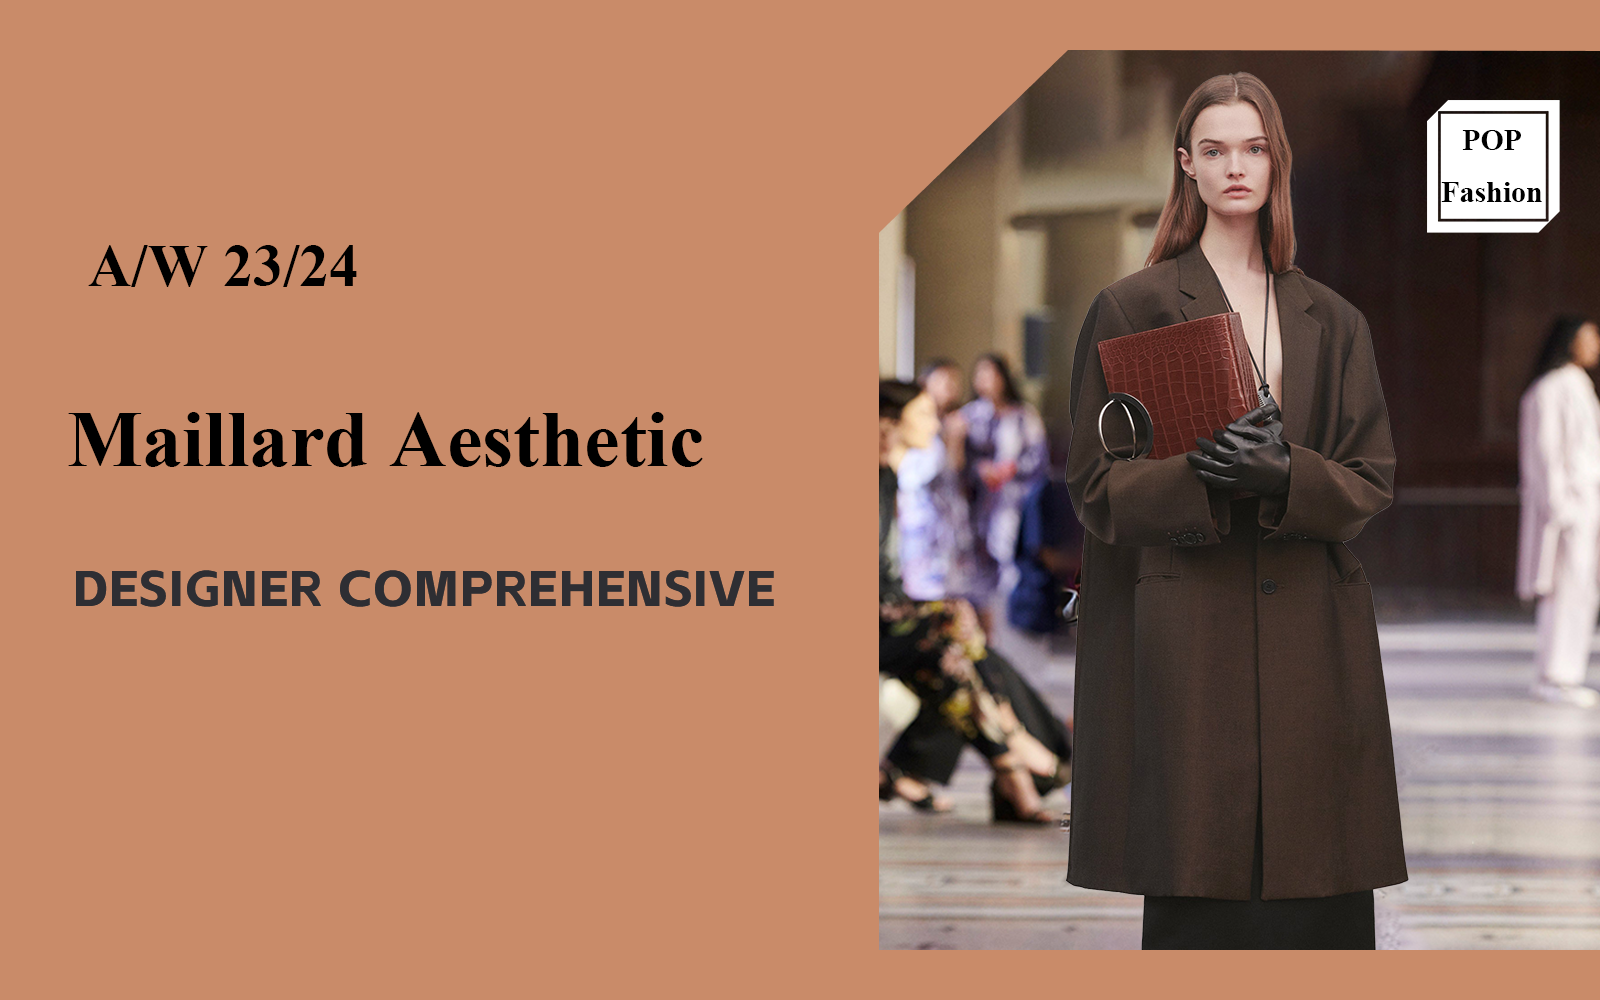 Maillard Aesthetic -- The Comprehensive Analysis of Womenswear Designer Brand